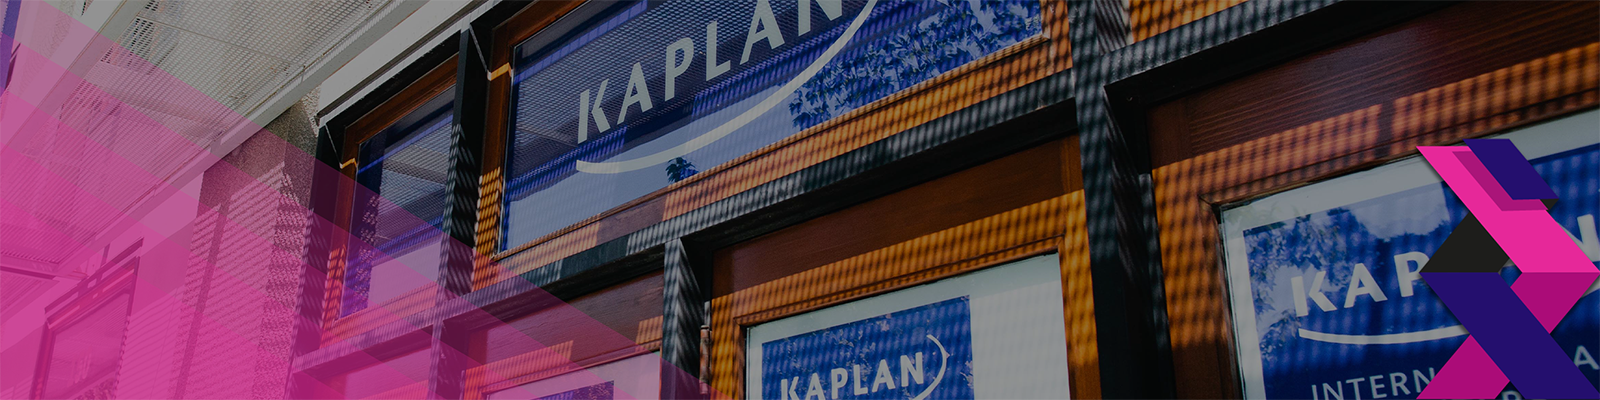 Kaplan International Languages - Bath görseli